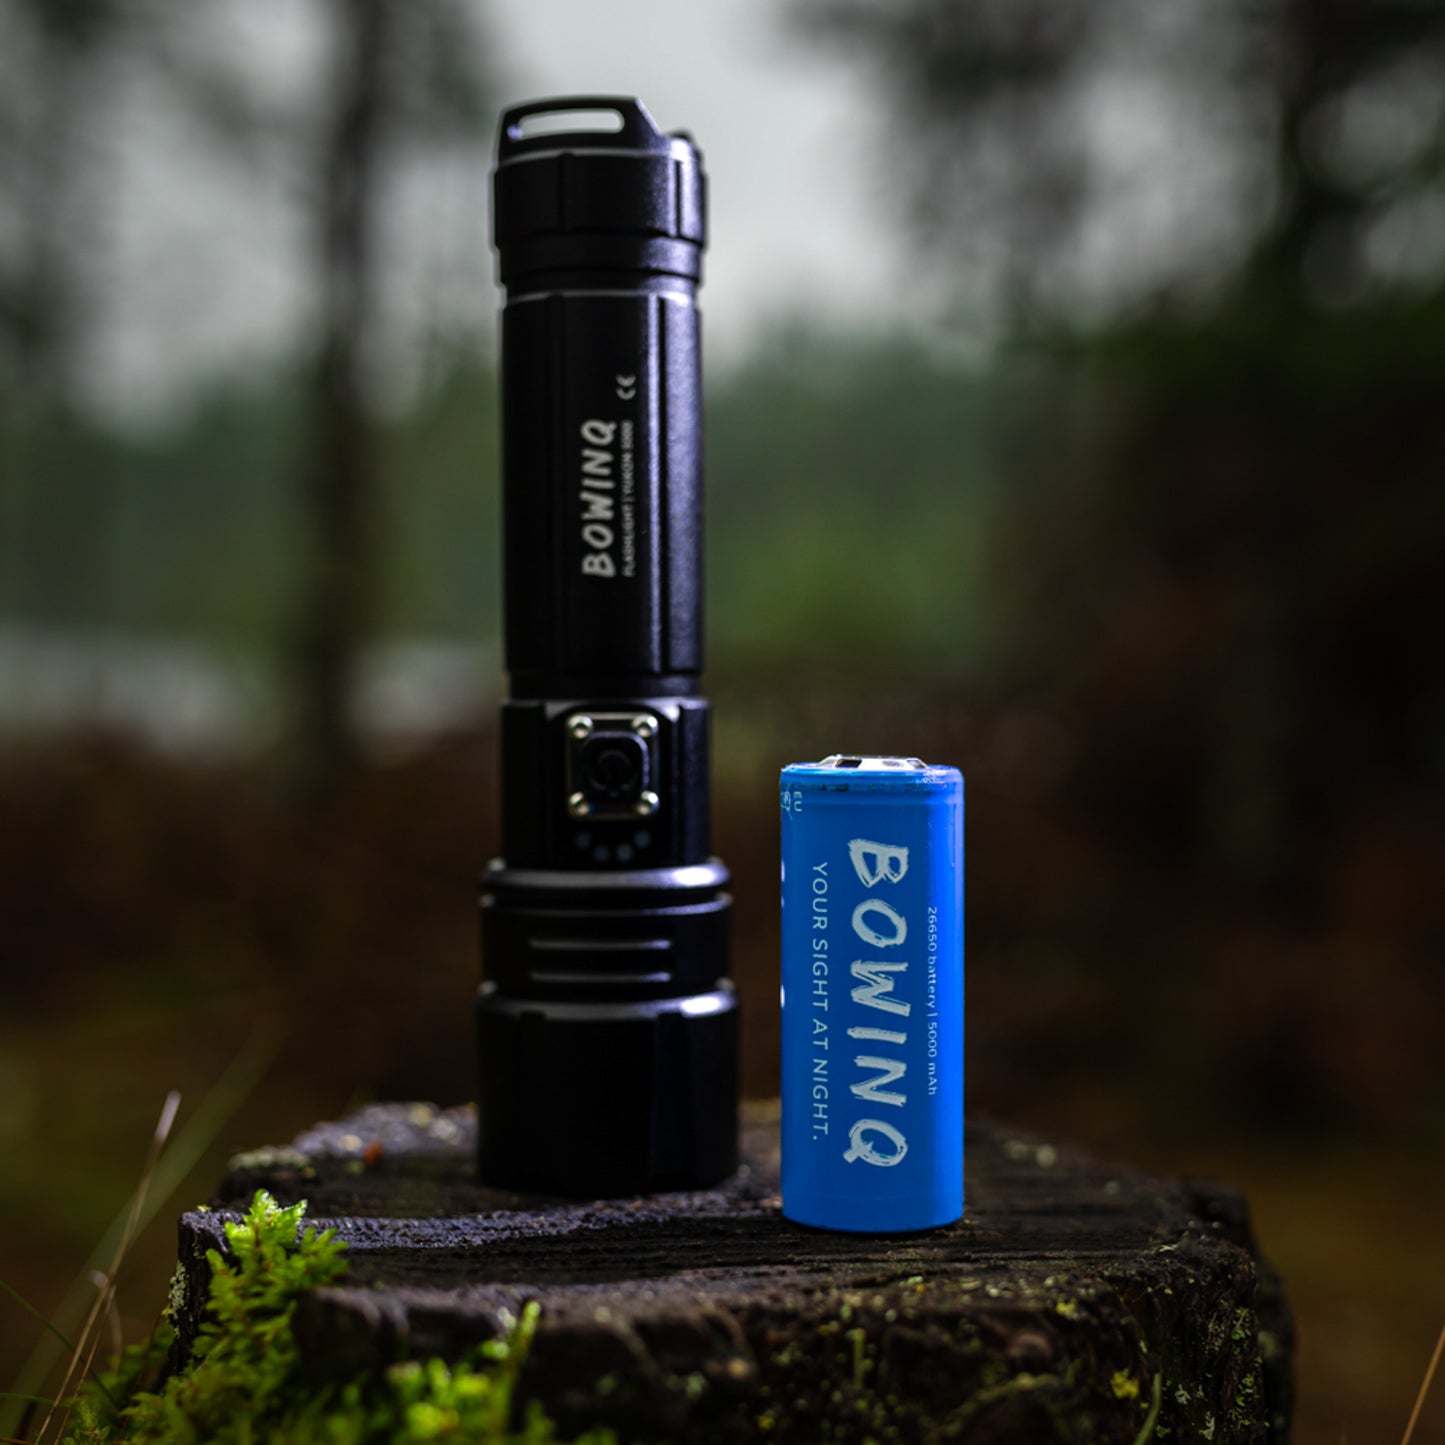 Yukon 5000 - rechargeable flashlight